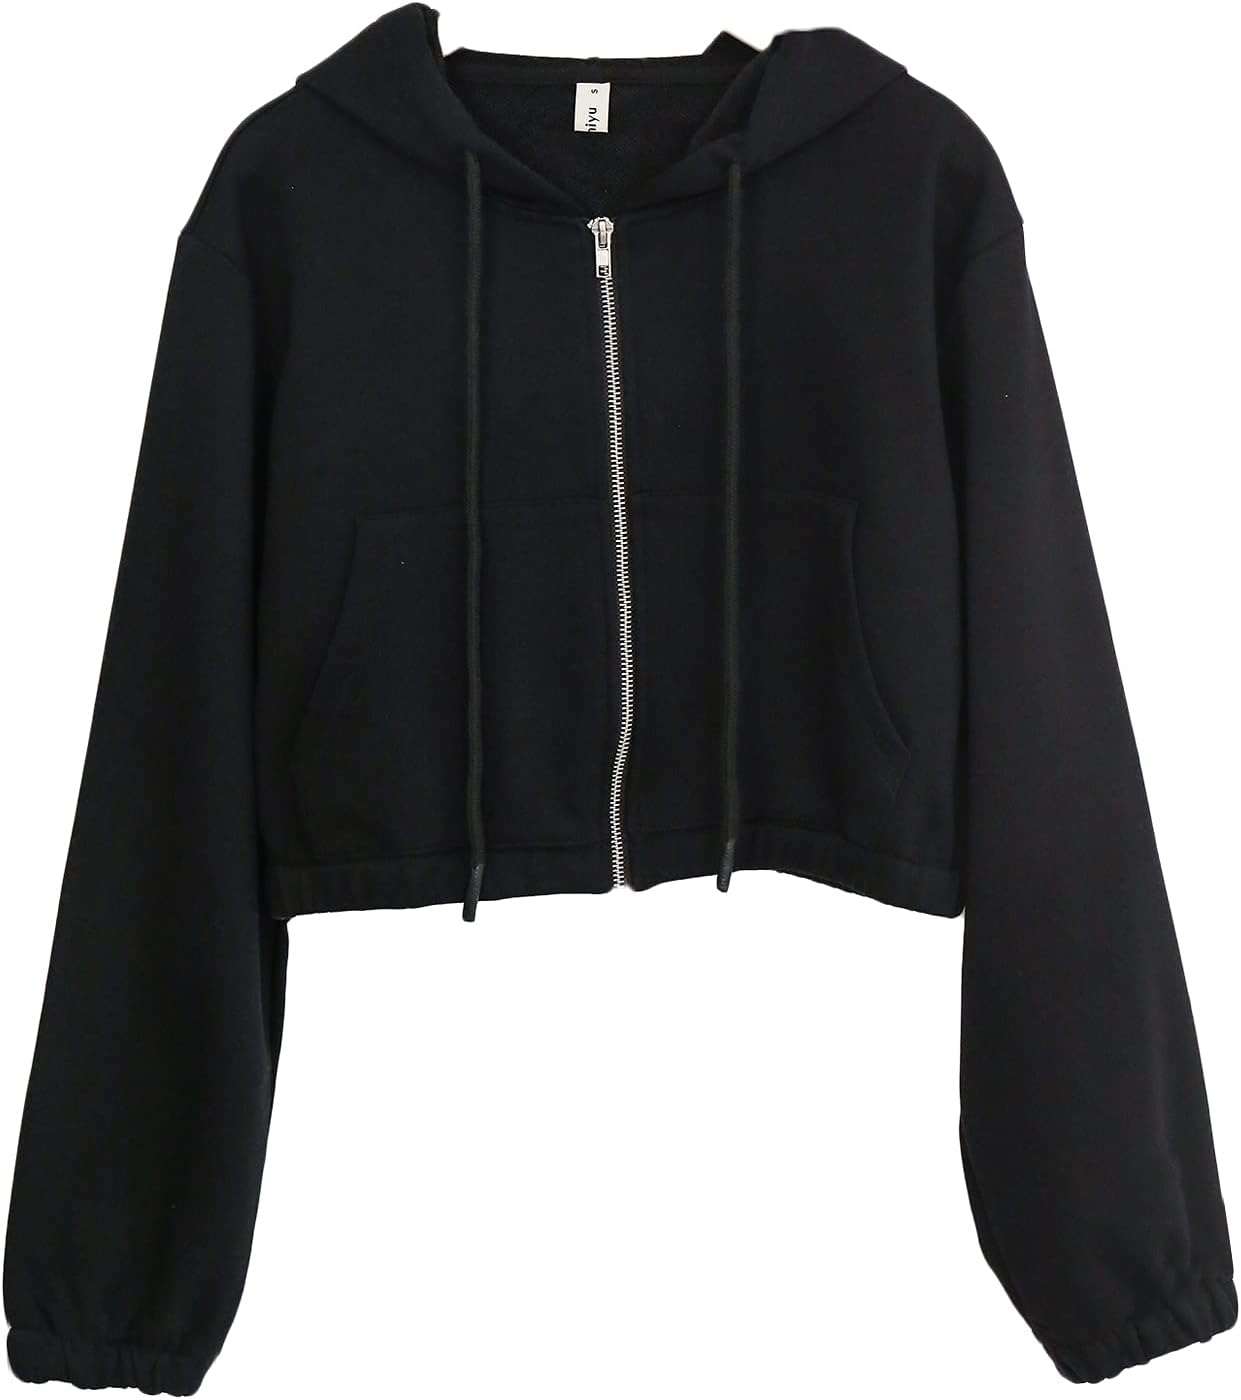 NTG Fad Black / XX-Large Women's Cropped Zip up Hoodie with Pockets Sweatshirt